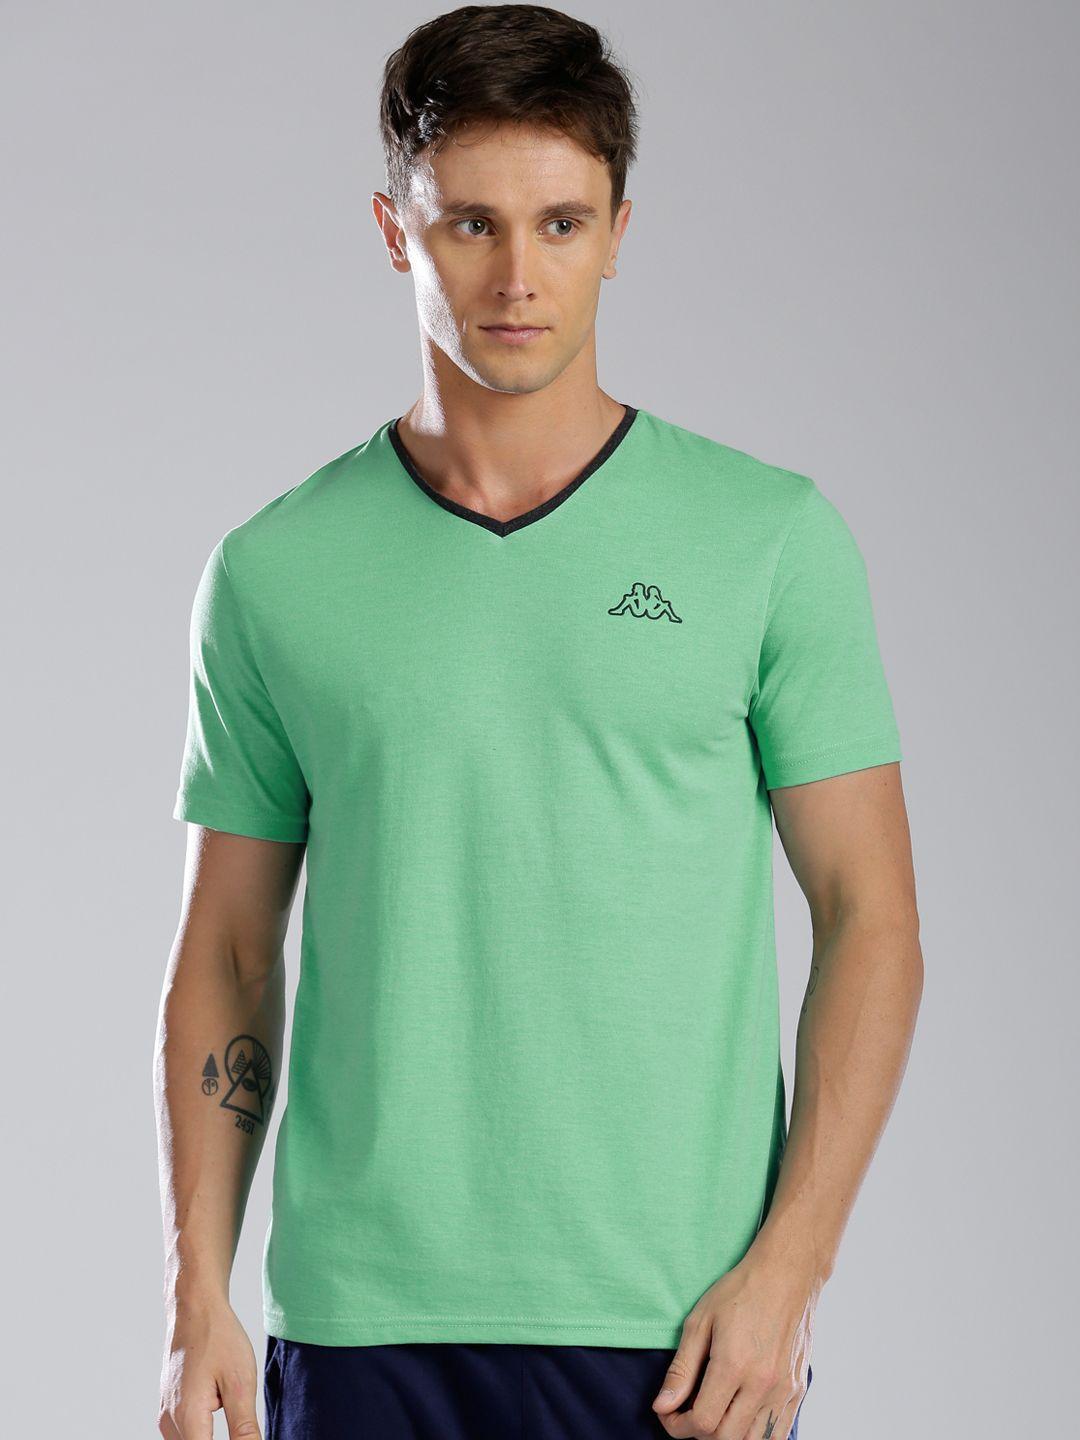 kappa green t-shirt